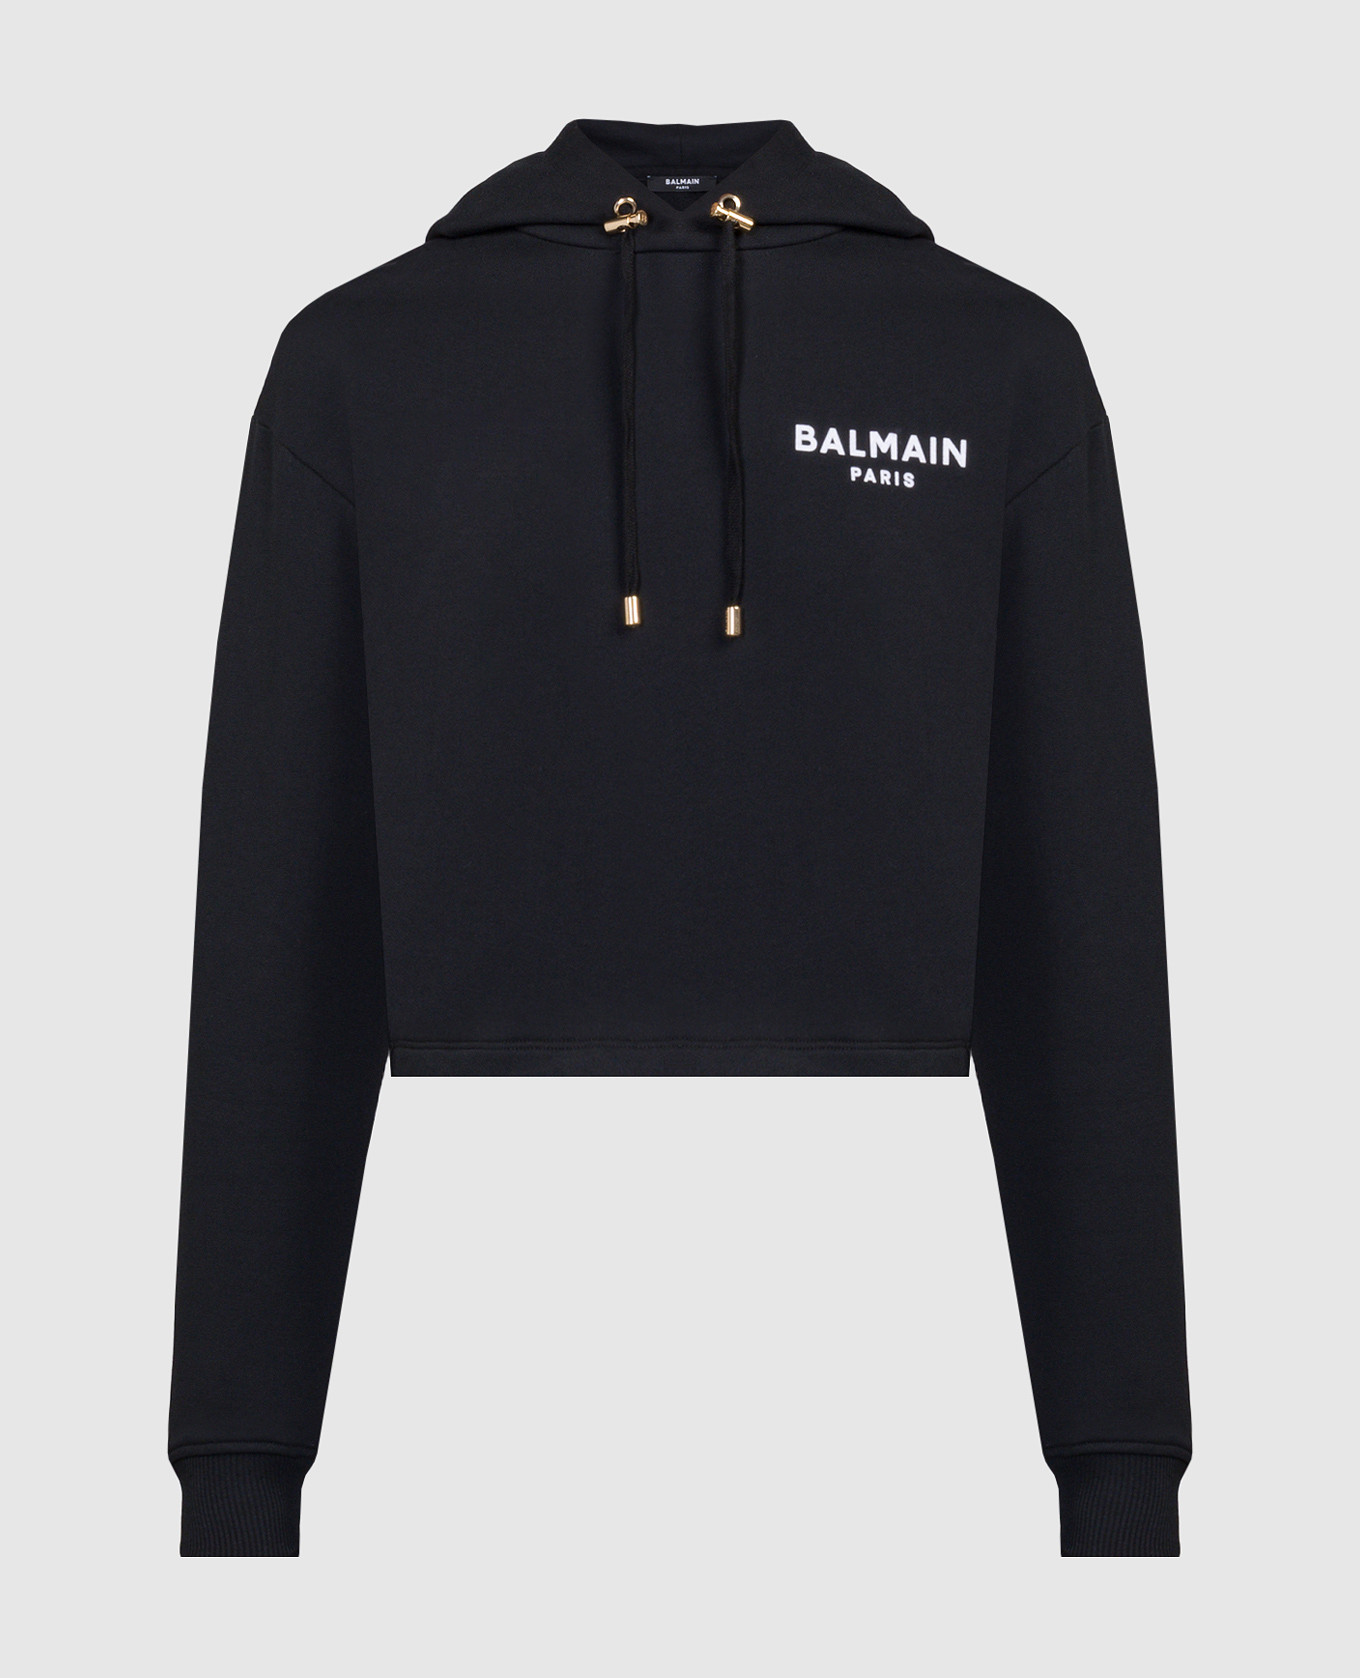 Black hoodie with textured logo